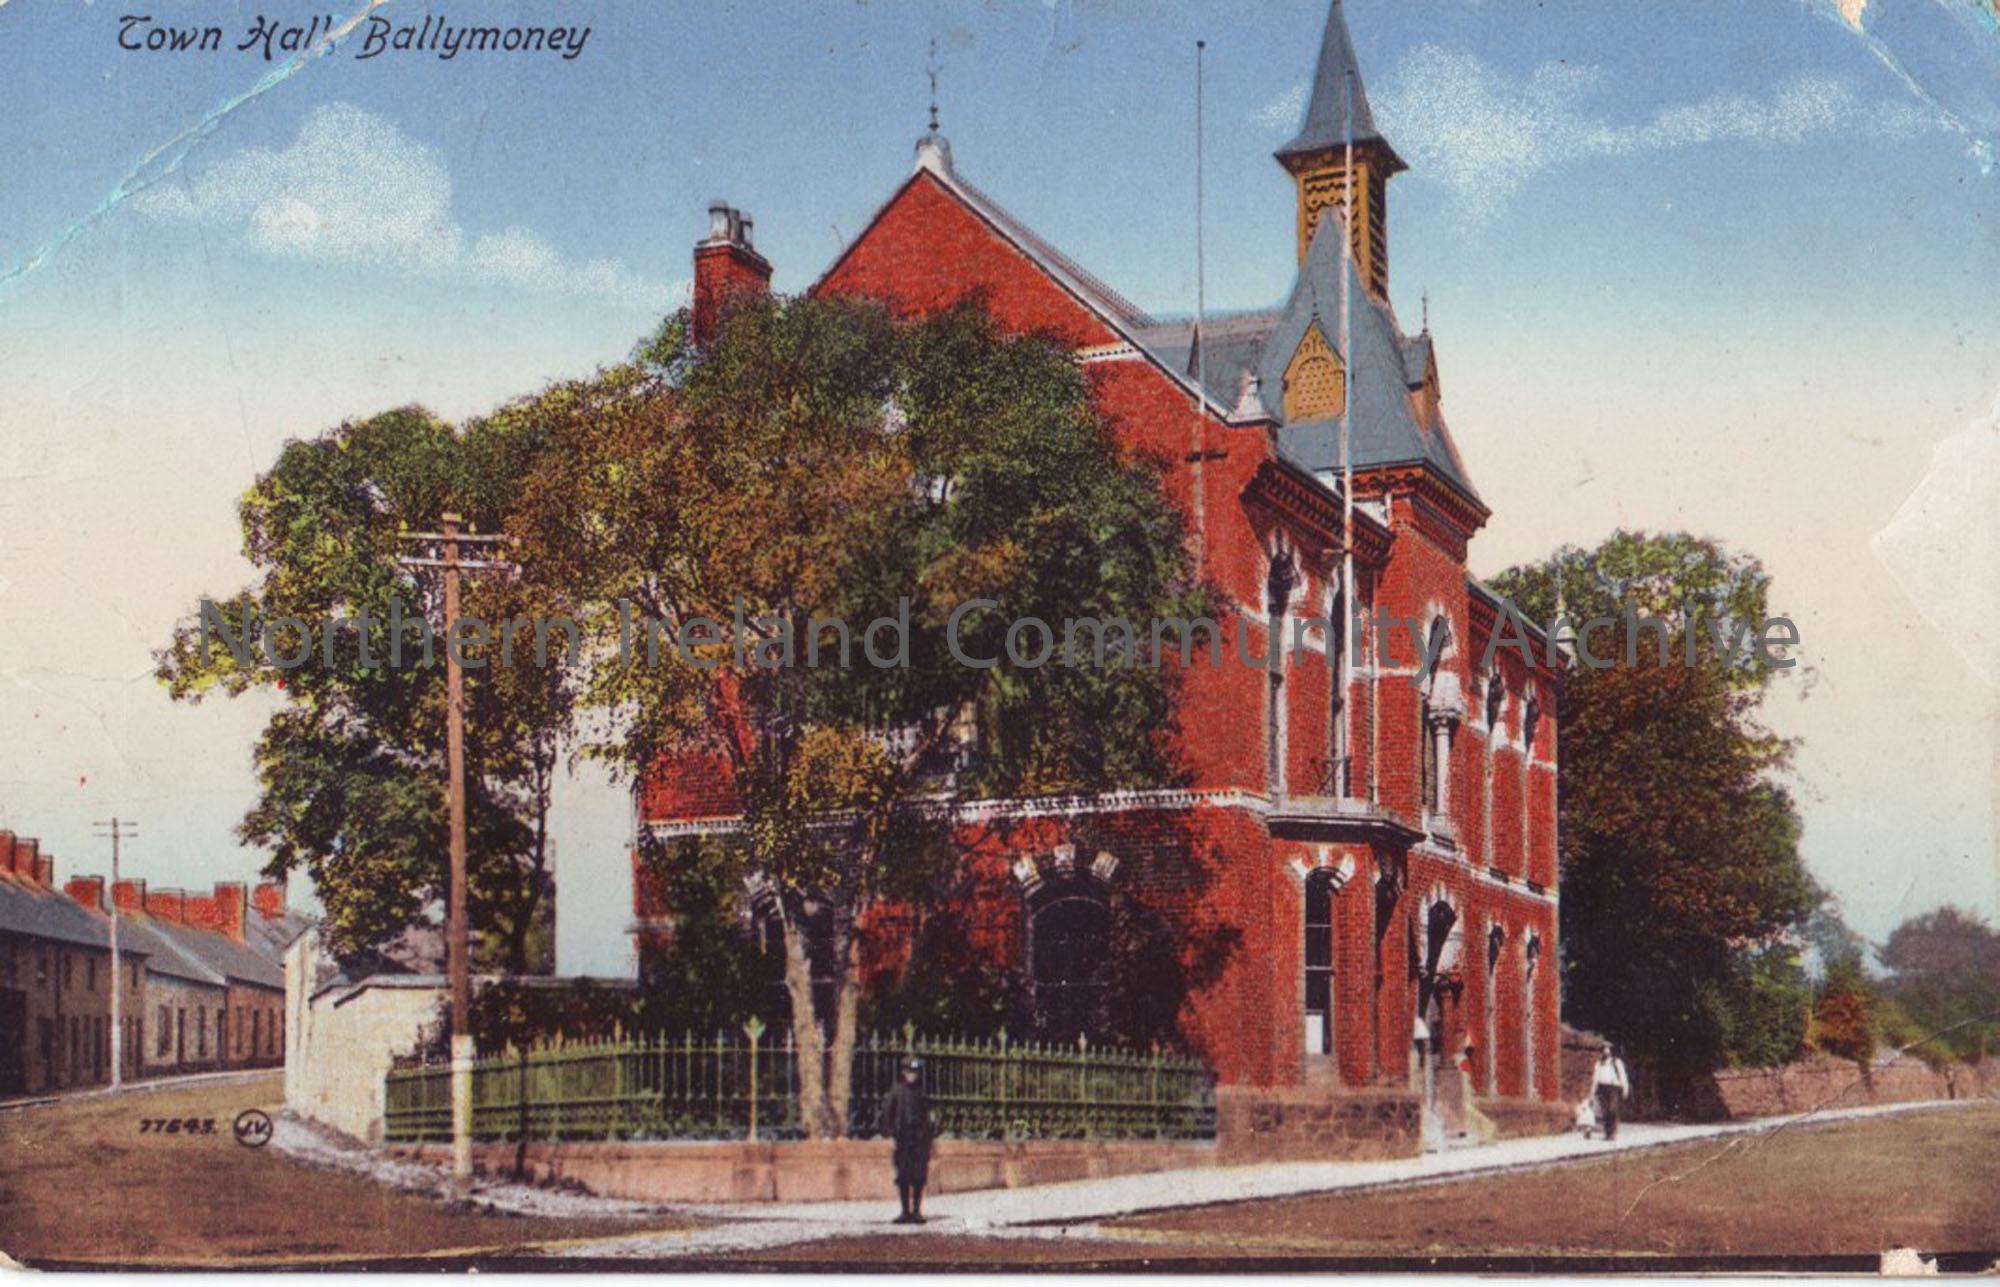 Coloured photograph of the Town Hall, Ballymoney